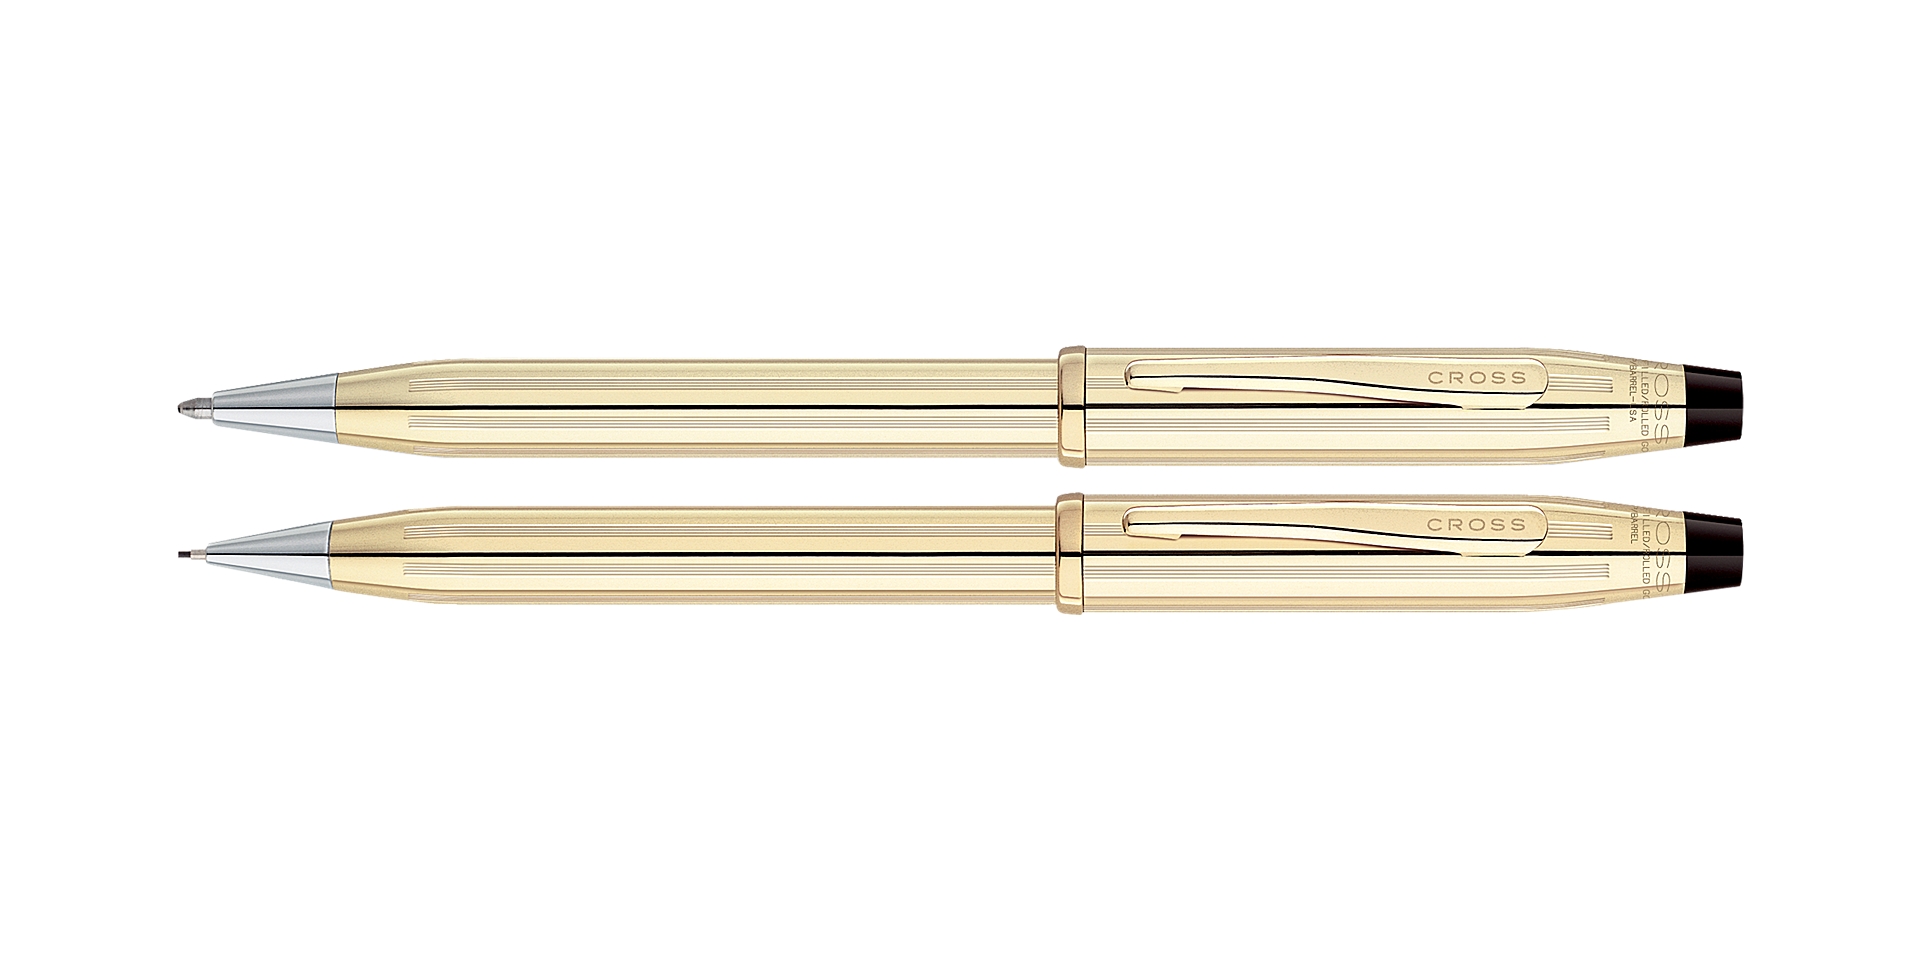  Century II 10 Karat Gold Filled/Rolled Gold Pen and Pencil Set